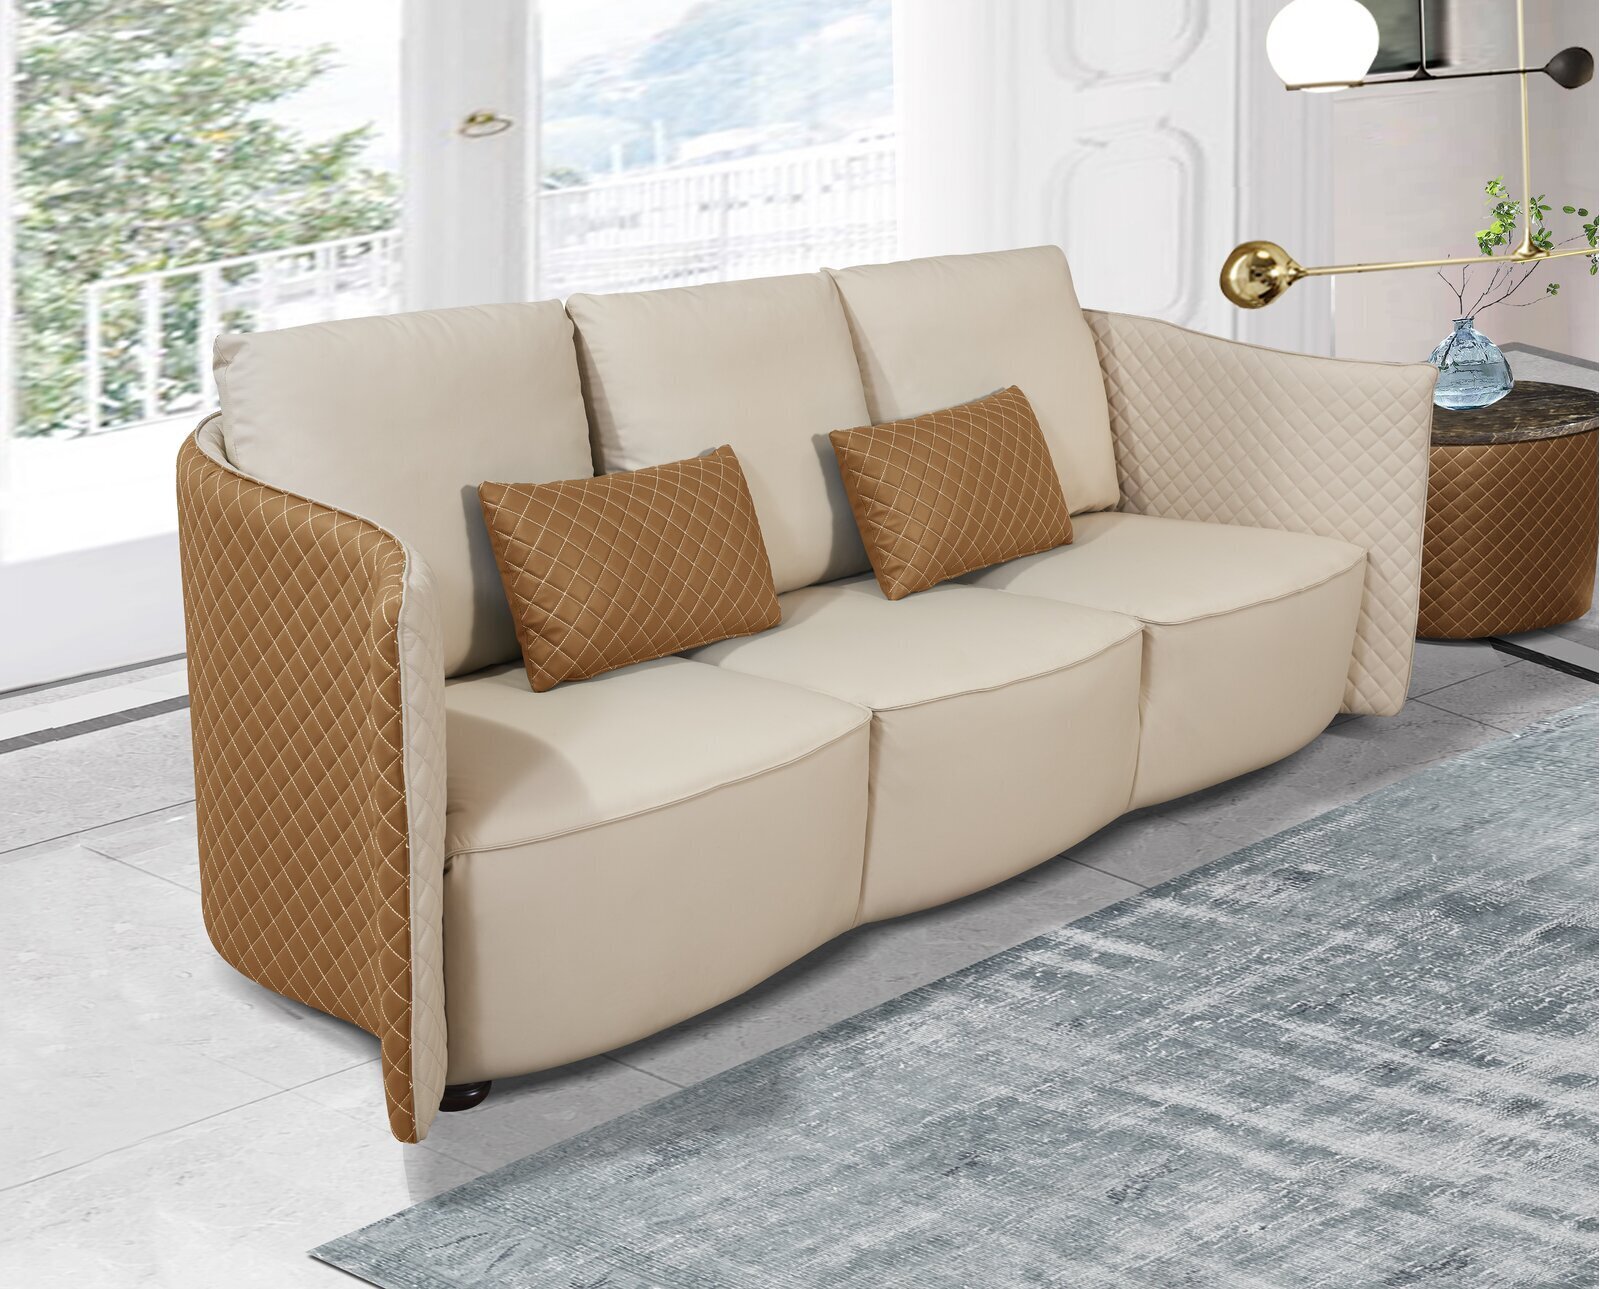 Smooth and Circular Leather Sofa